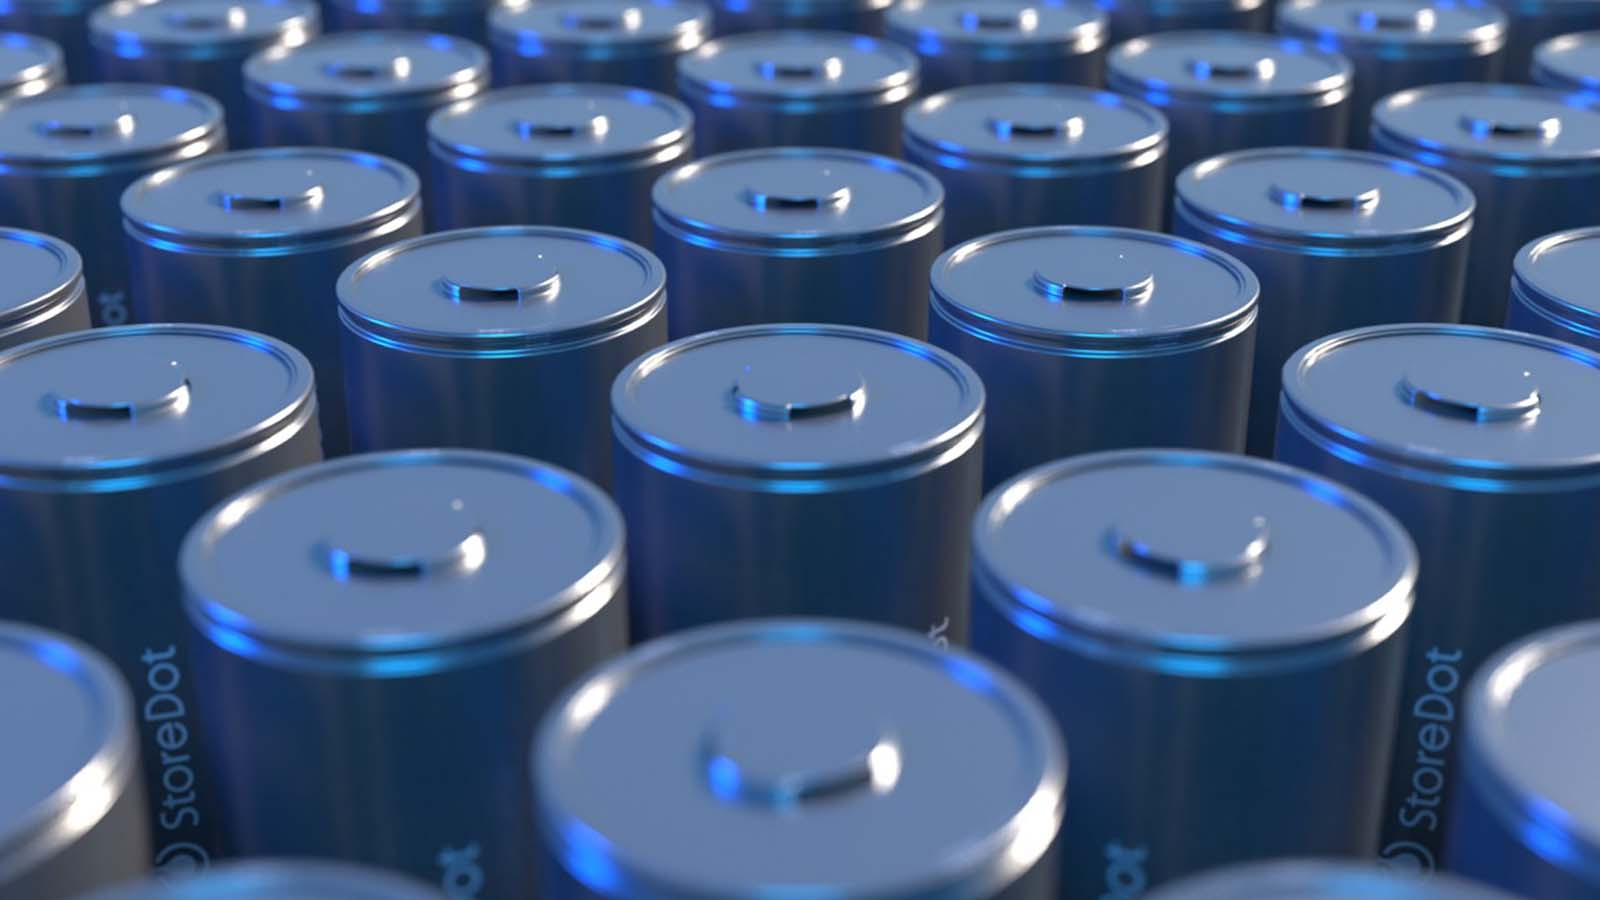 Storedot battery cells